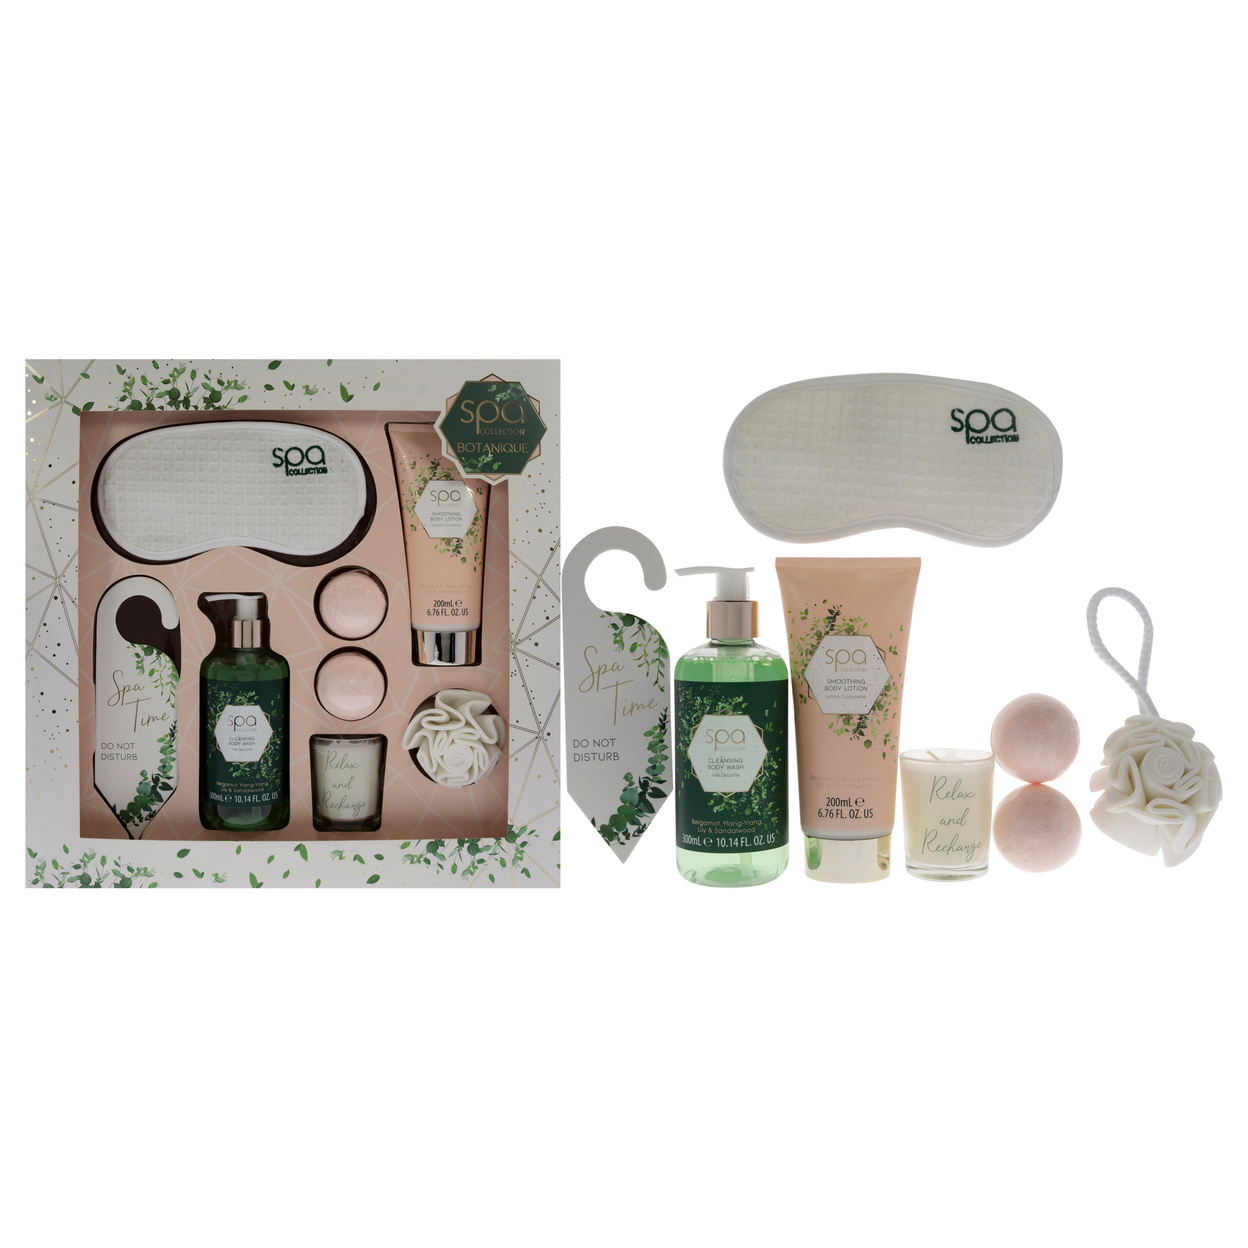 S&G Spa Botanique Home Spa Beauty Kit 20.95 Oz